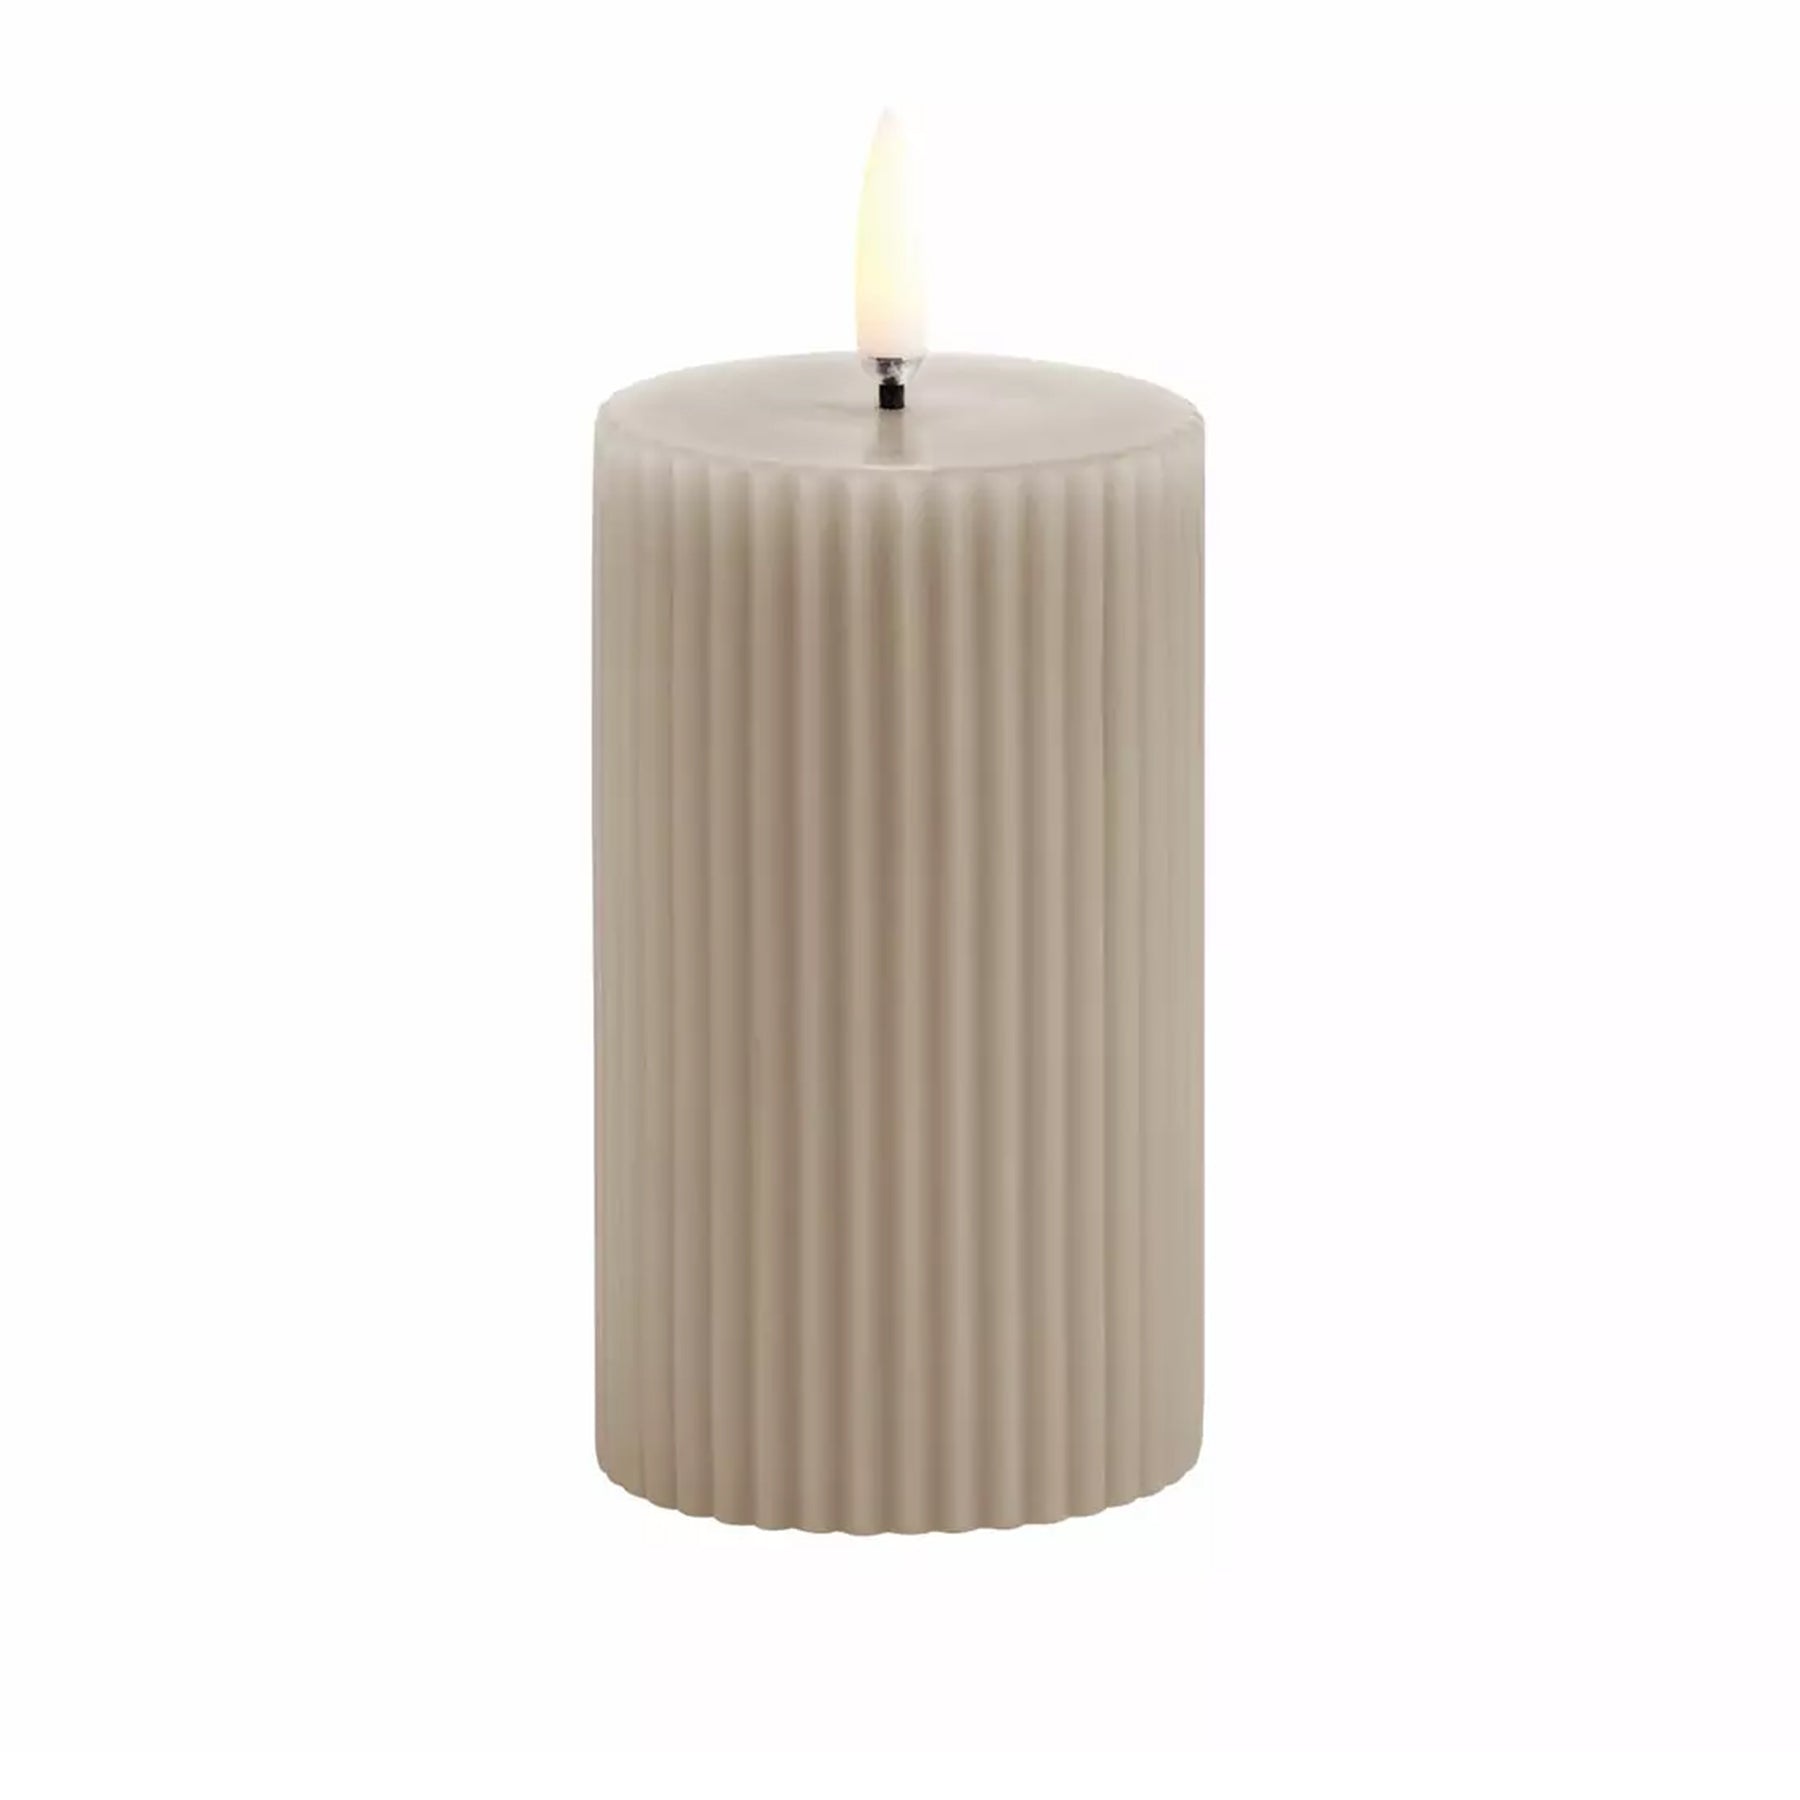 LED Pillar Candle 10 cm, Sand Stone - شمعة LED مضيئة 10 سم, لون بيج